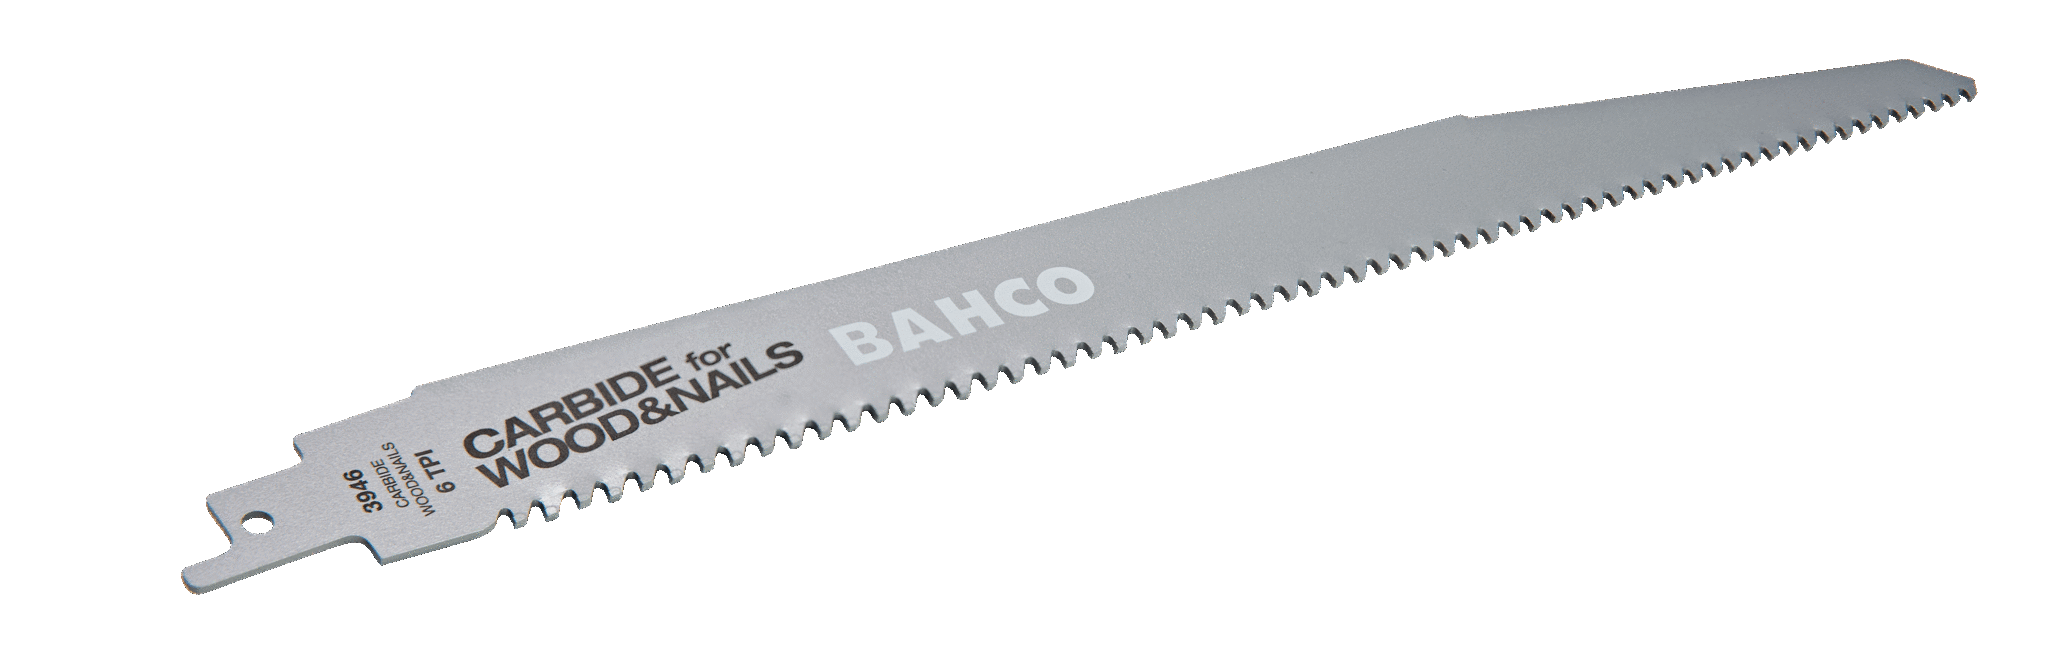 Hitachi 725349 16 Inch Abrasive Material Carbide Tip Recip Saw Blades 2Pack 